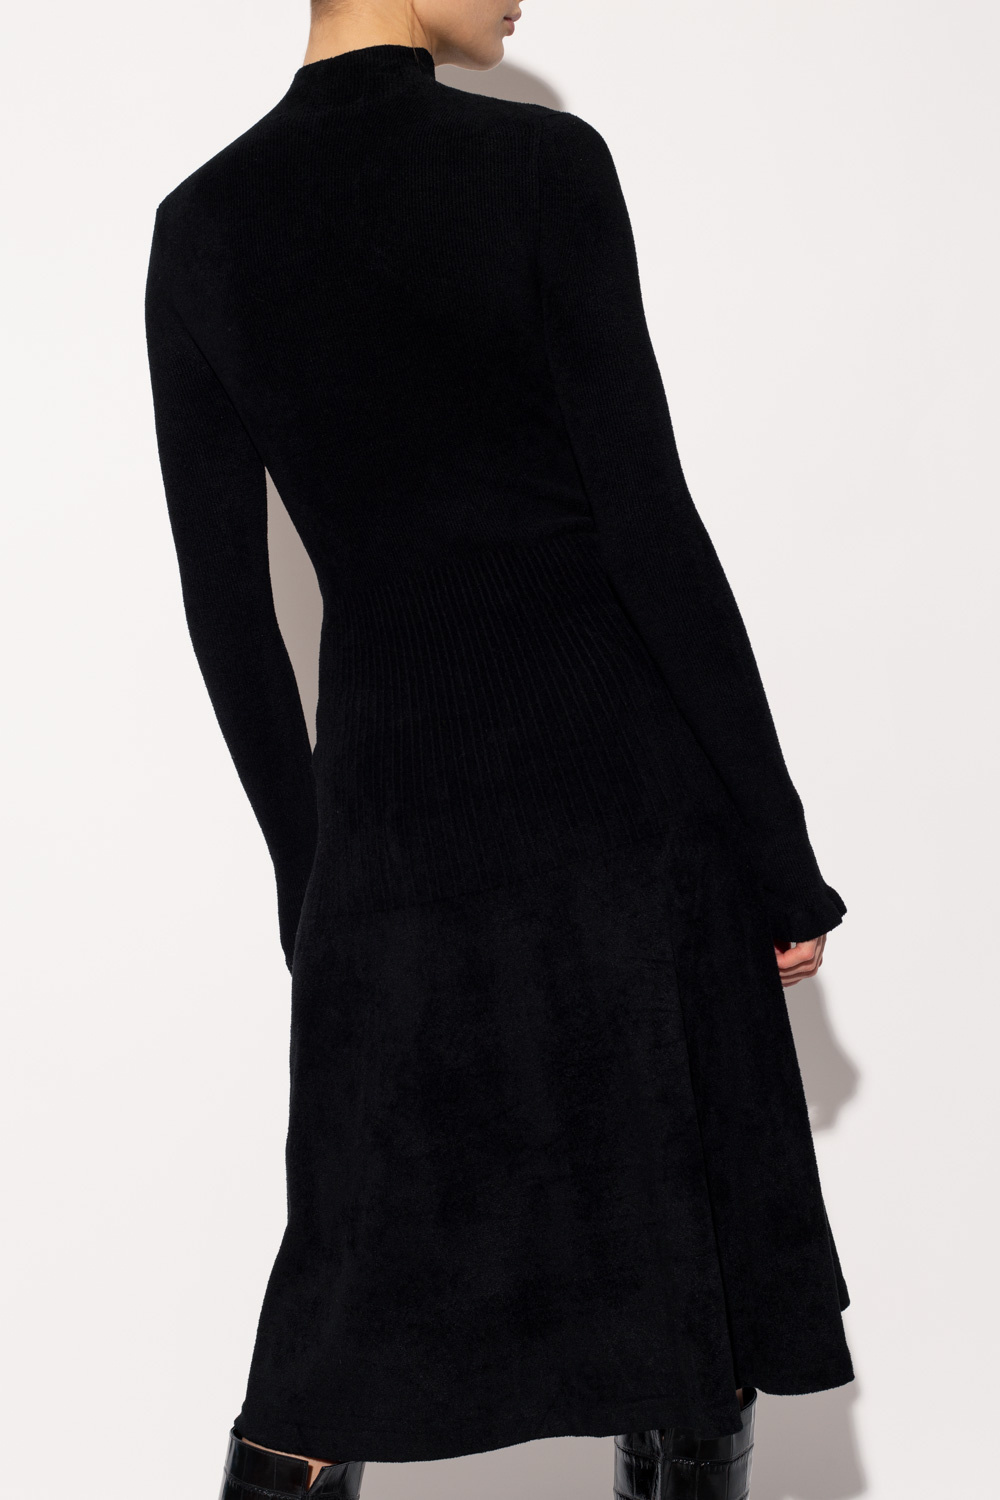 proenza designer Schouler White Label Dress with high neck